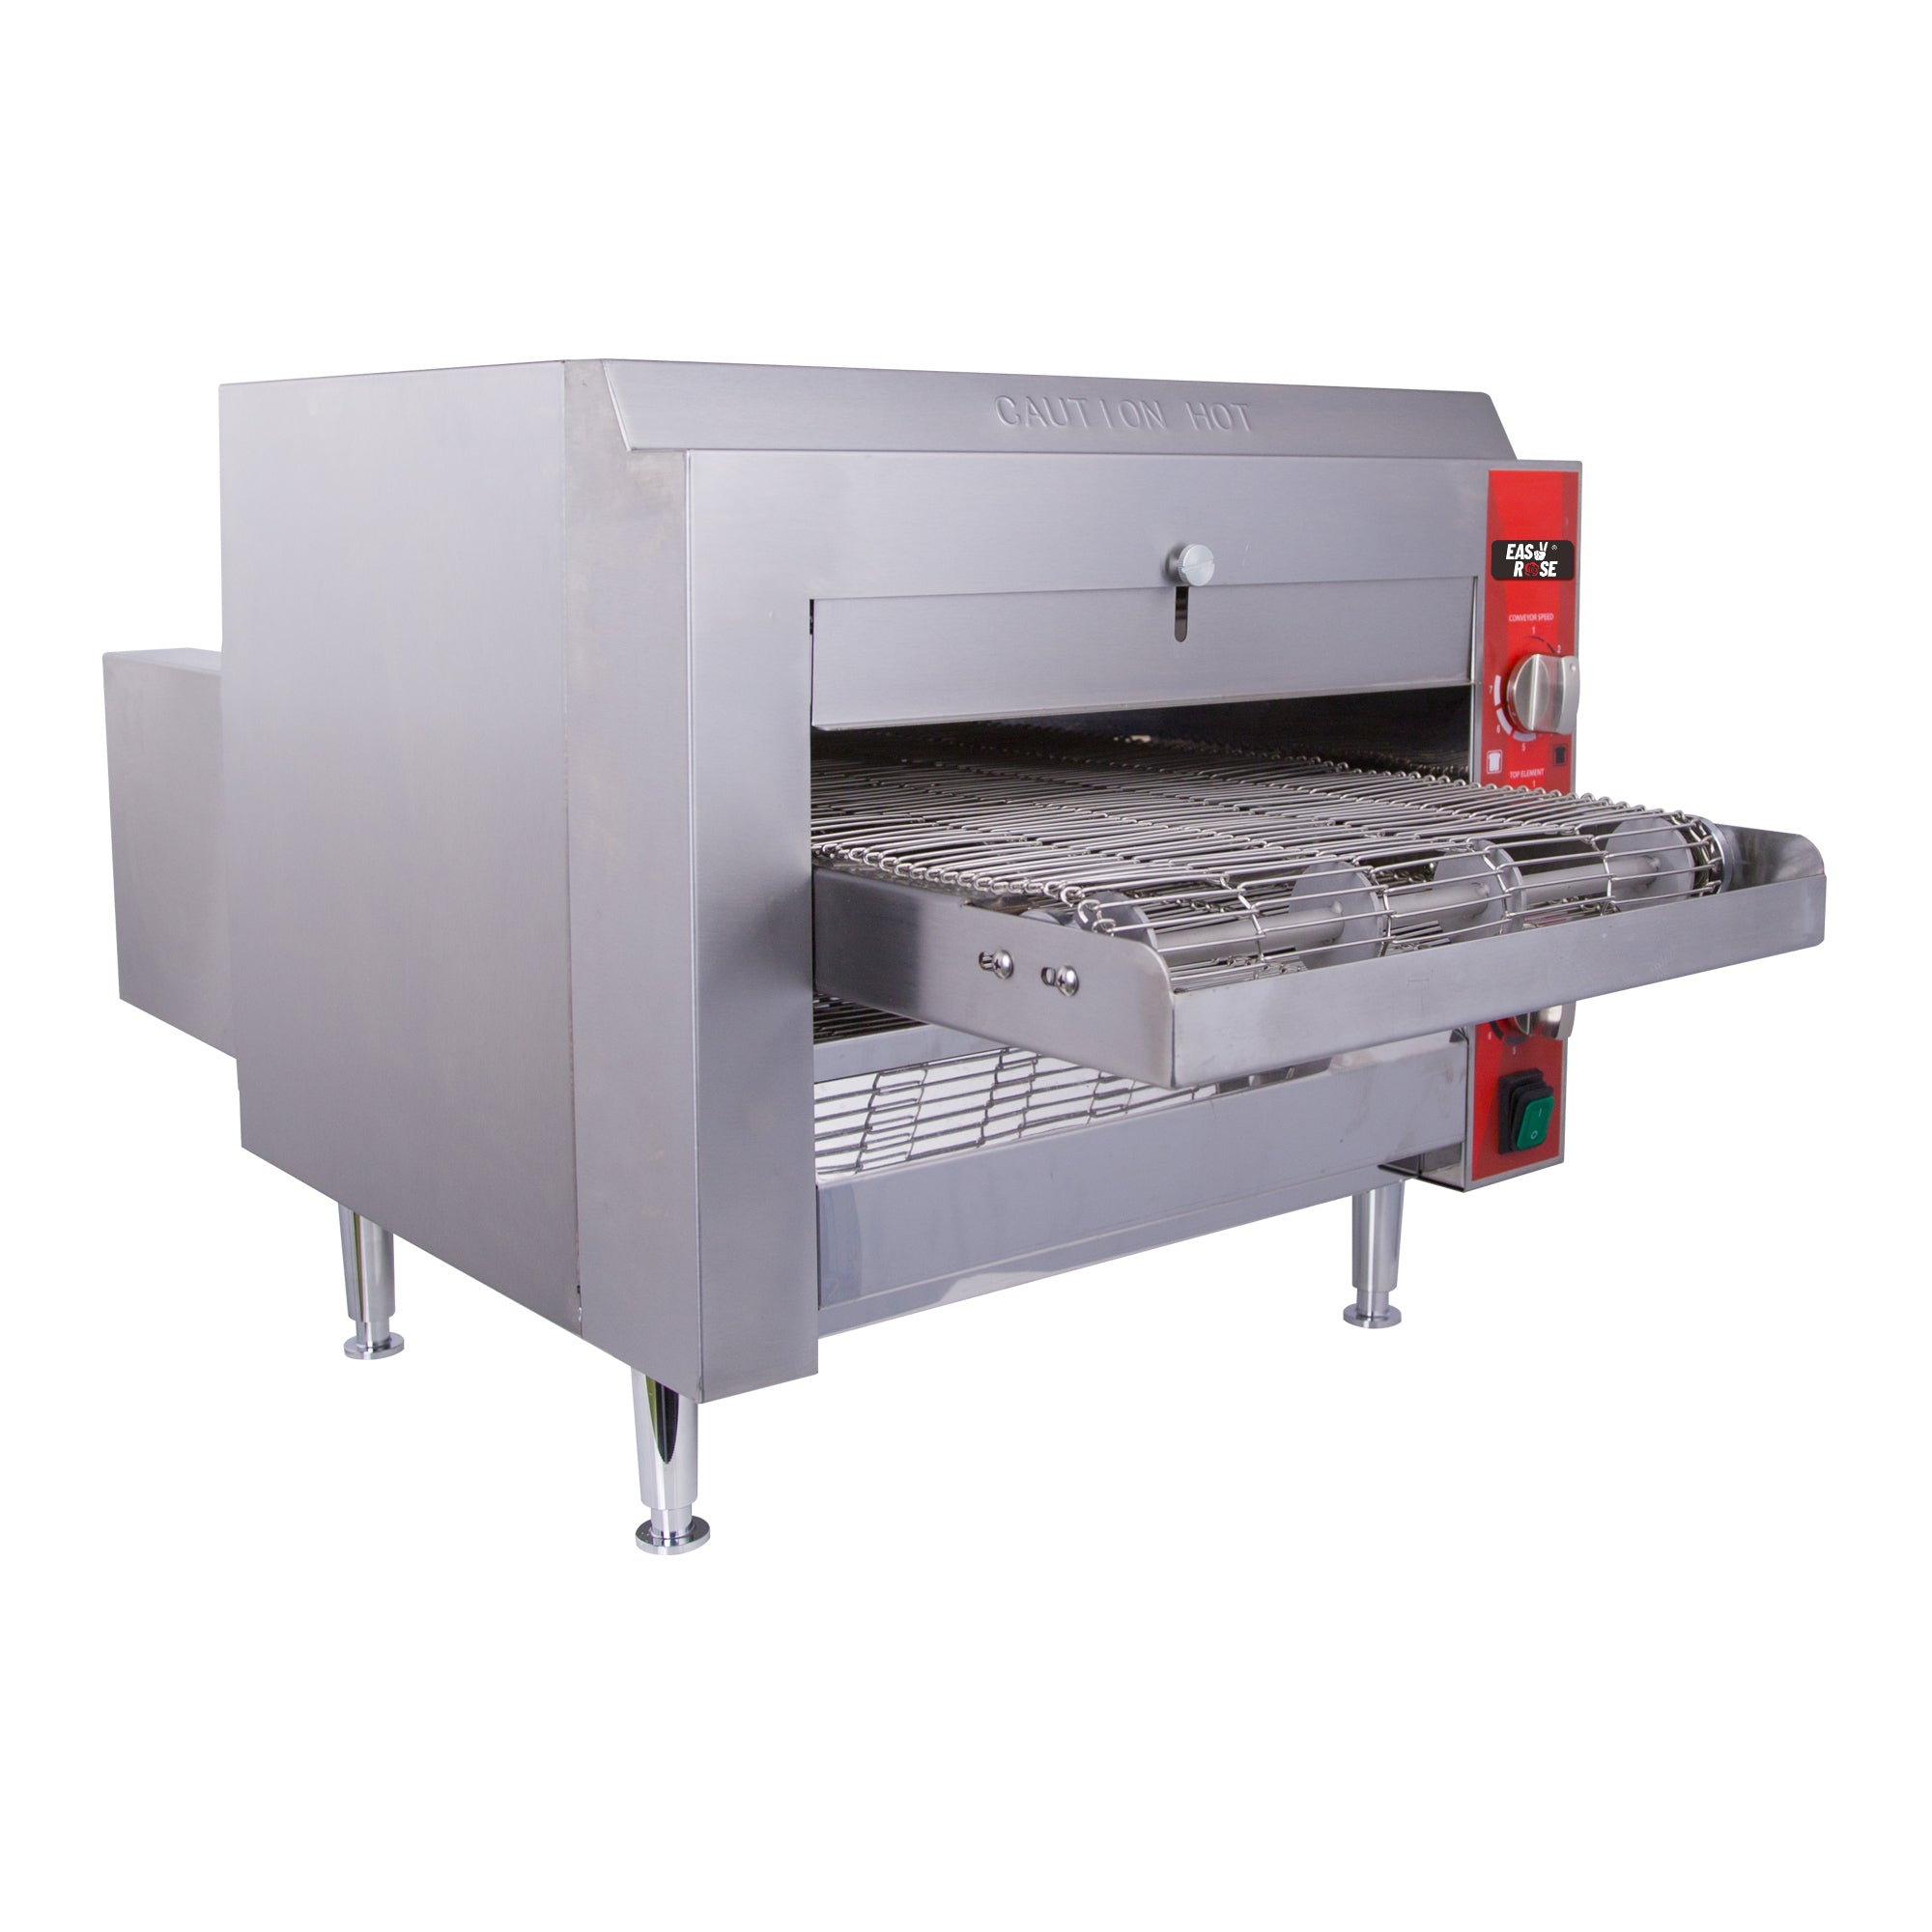 EasyRose Conveyor Commercial Pizza Oven 50-300 °C /122- 572°F Temperature Range for Bakery Western Restaurant - 240V 2800W (10.5”wide belt)